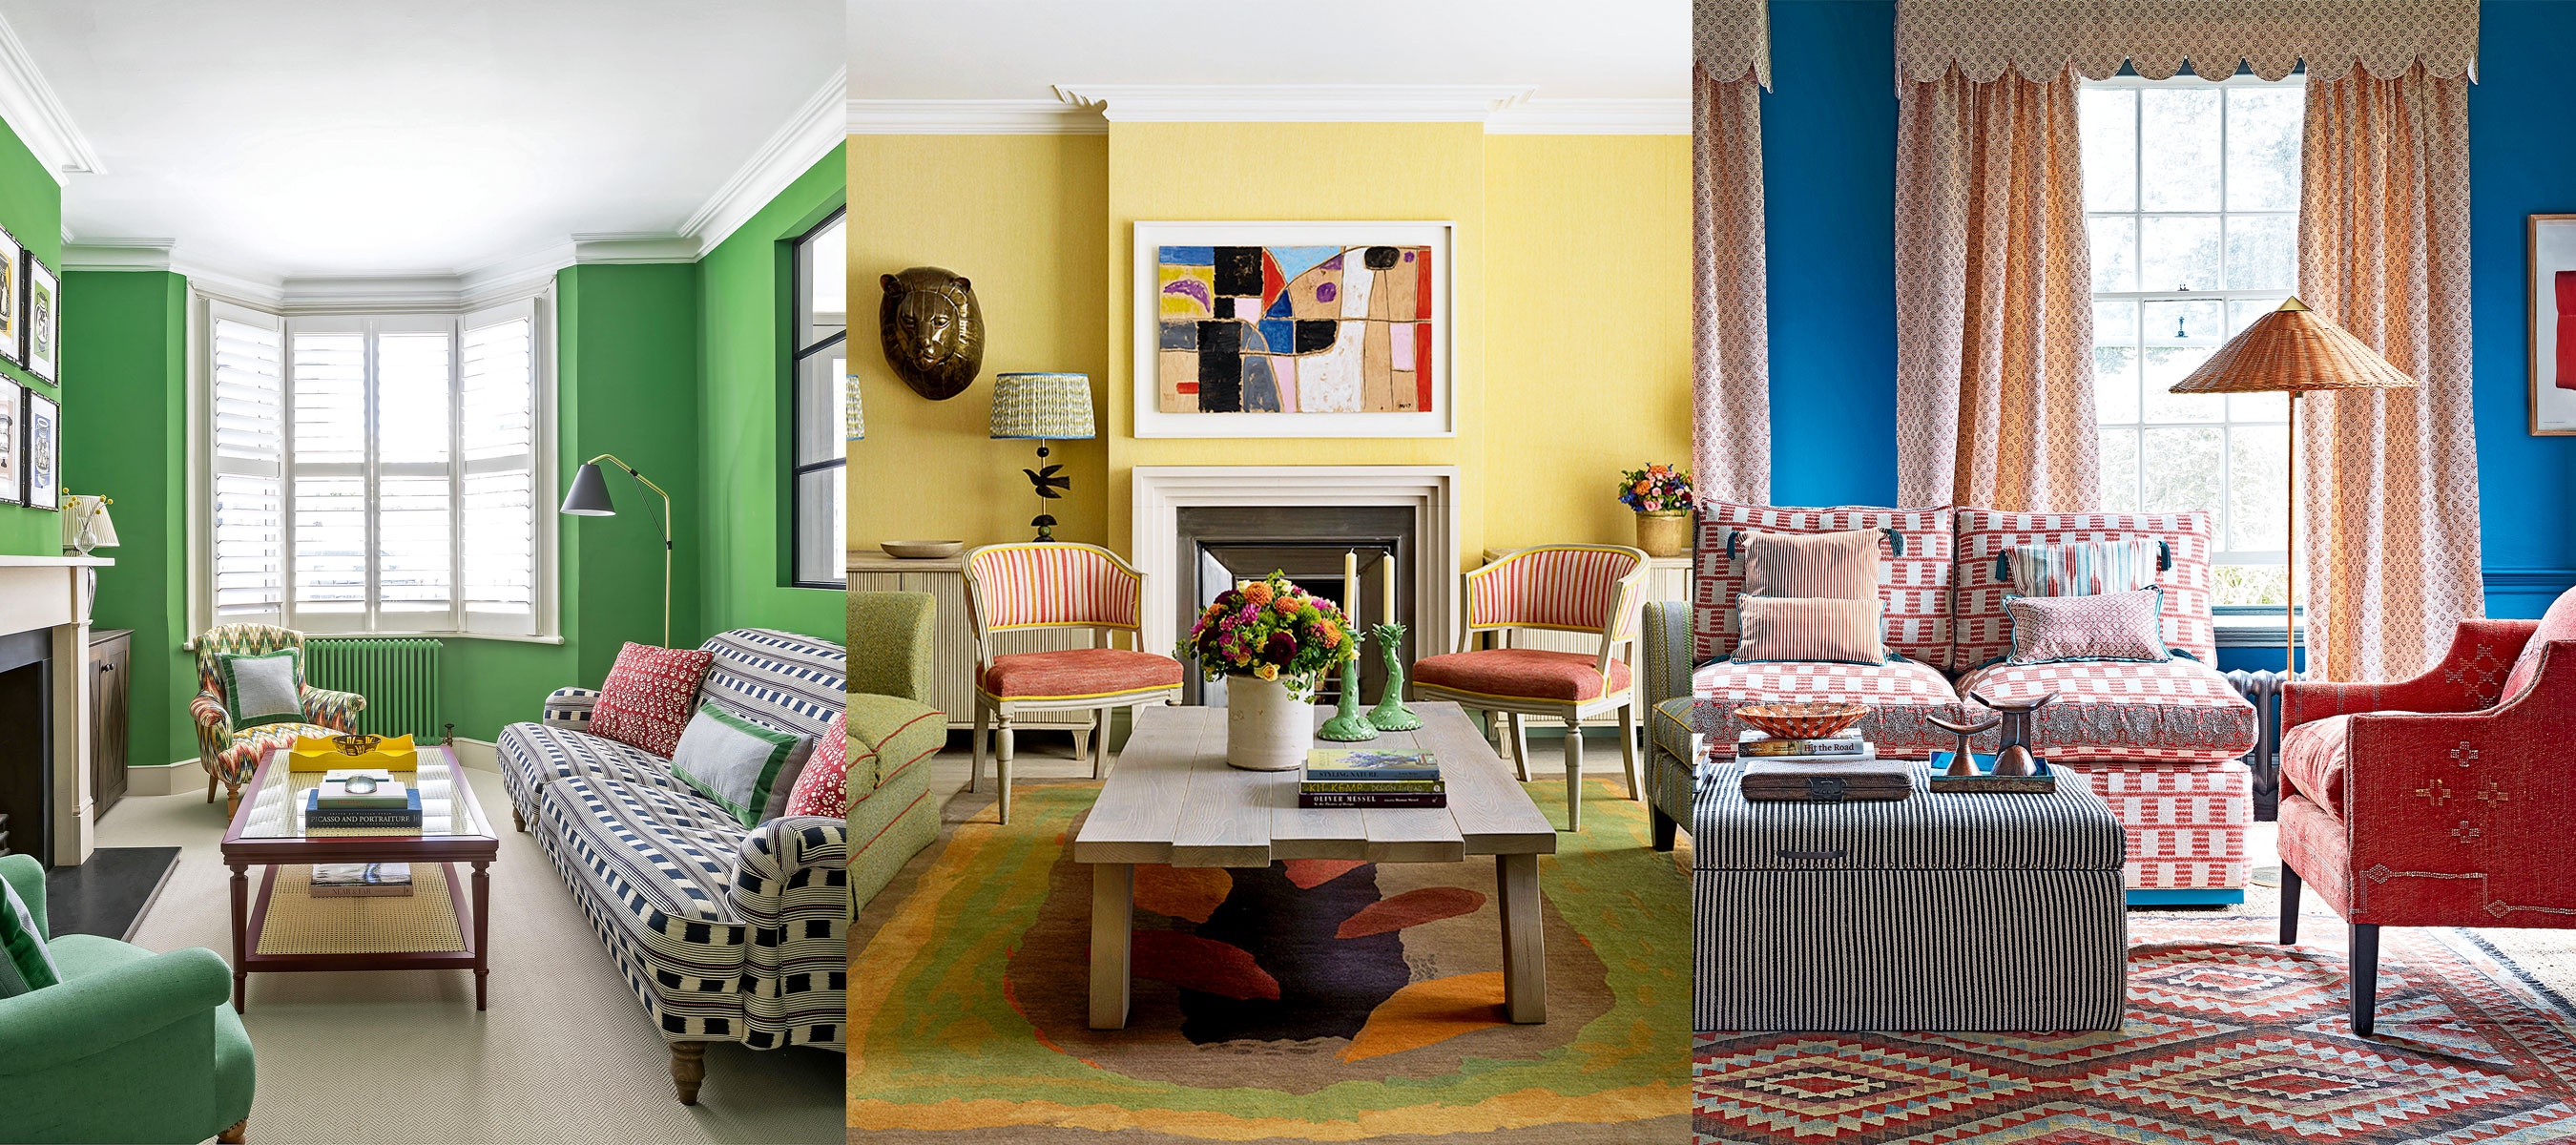 Living Room Paint Ideas: 30 Top Living Room Paint Colors |